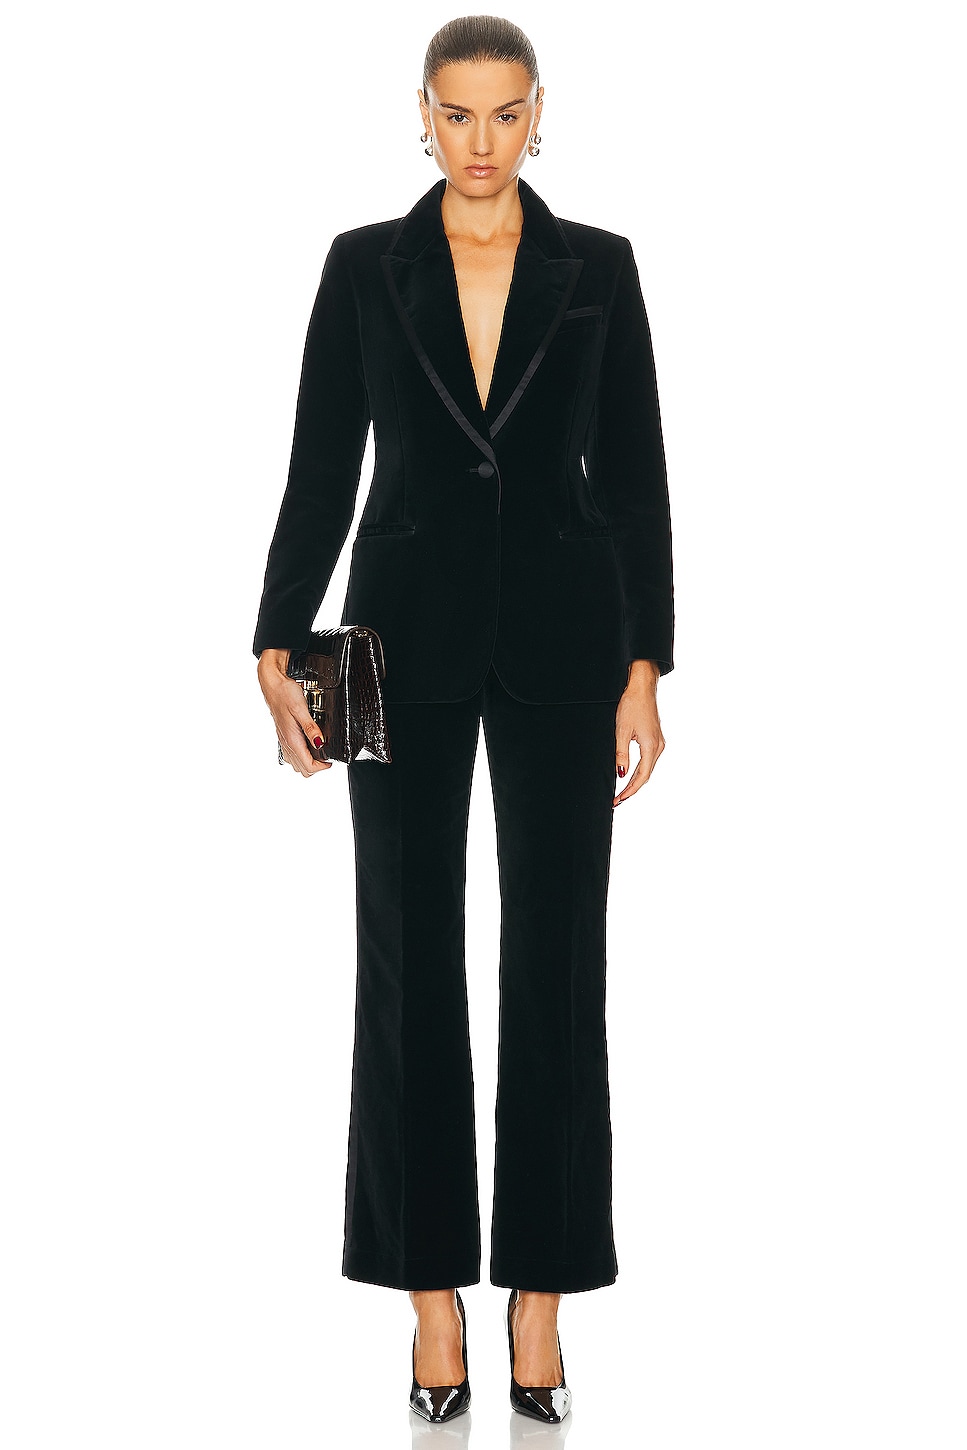 Image 1 of FWRD Renew Gucci Velvet Blazer & Pant Set in Black